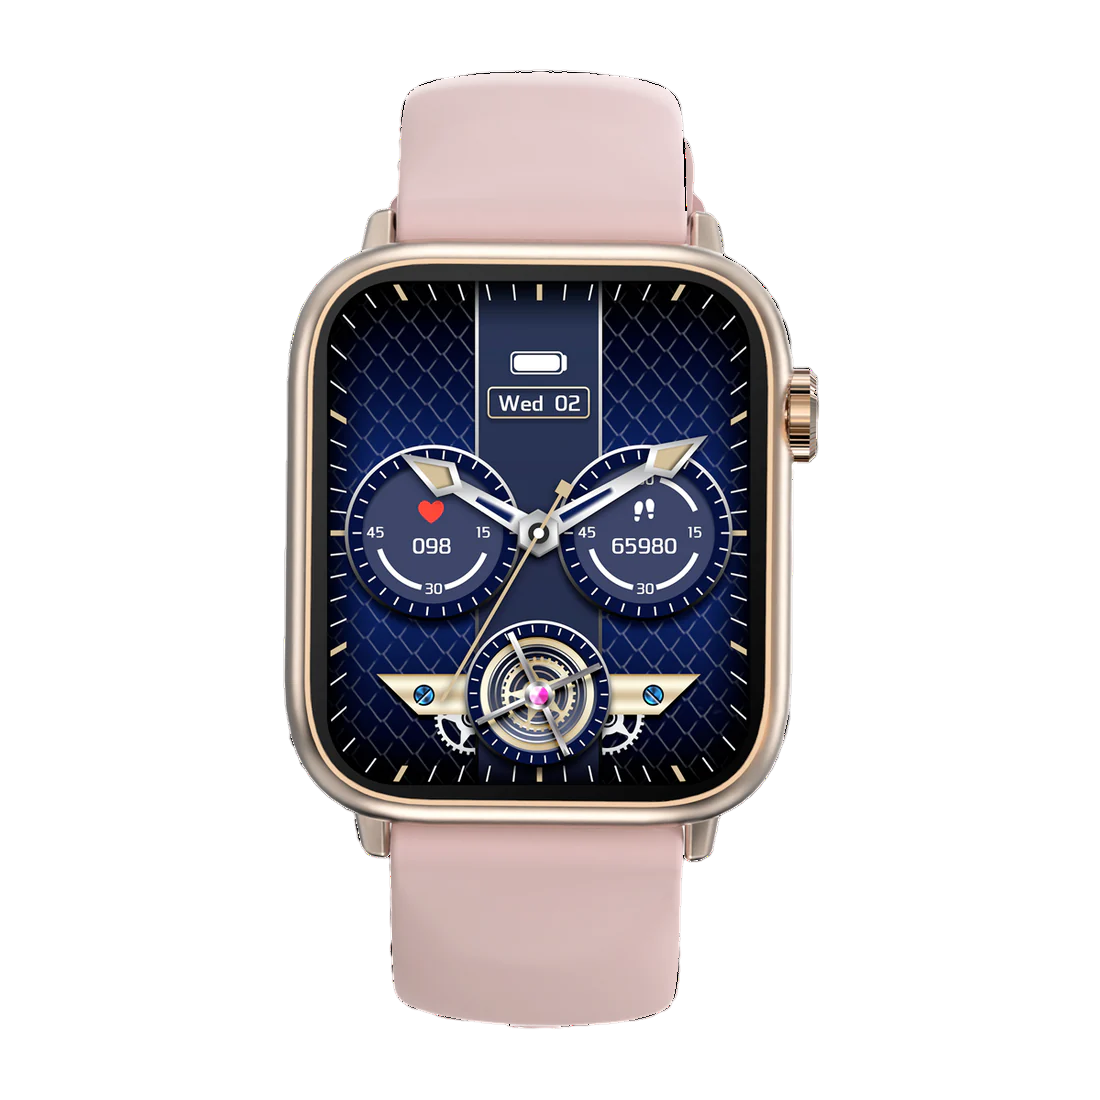 YOLO Watch Pro Max | Bluetooth Calling Smart Watch